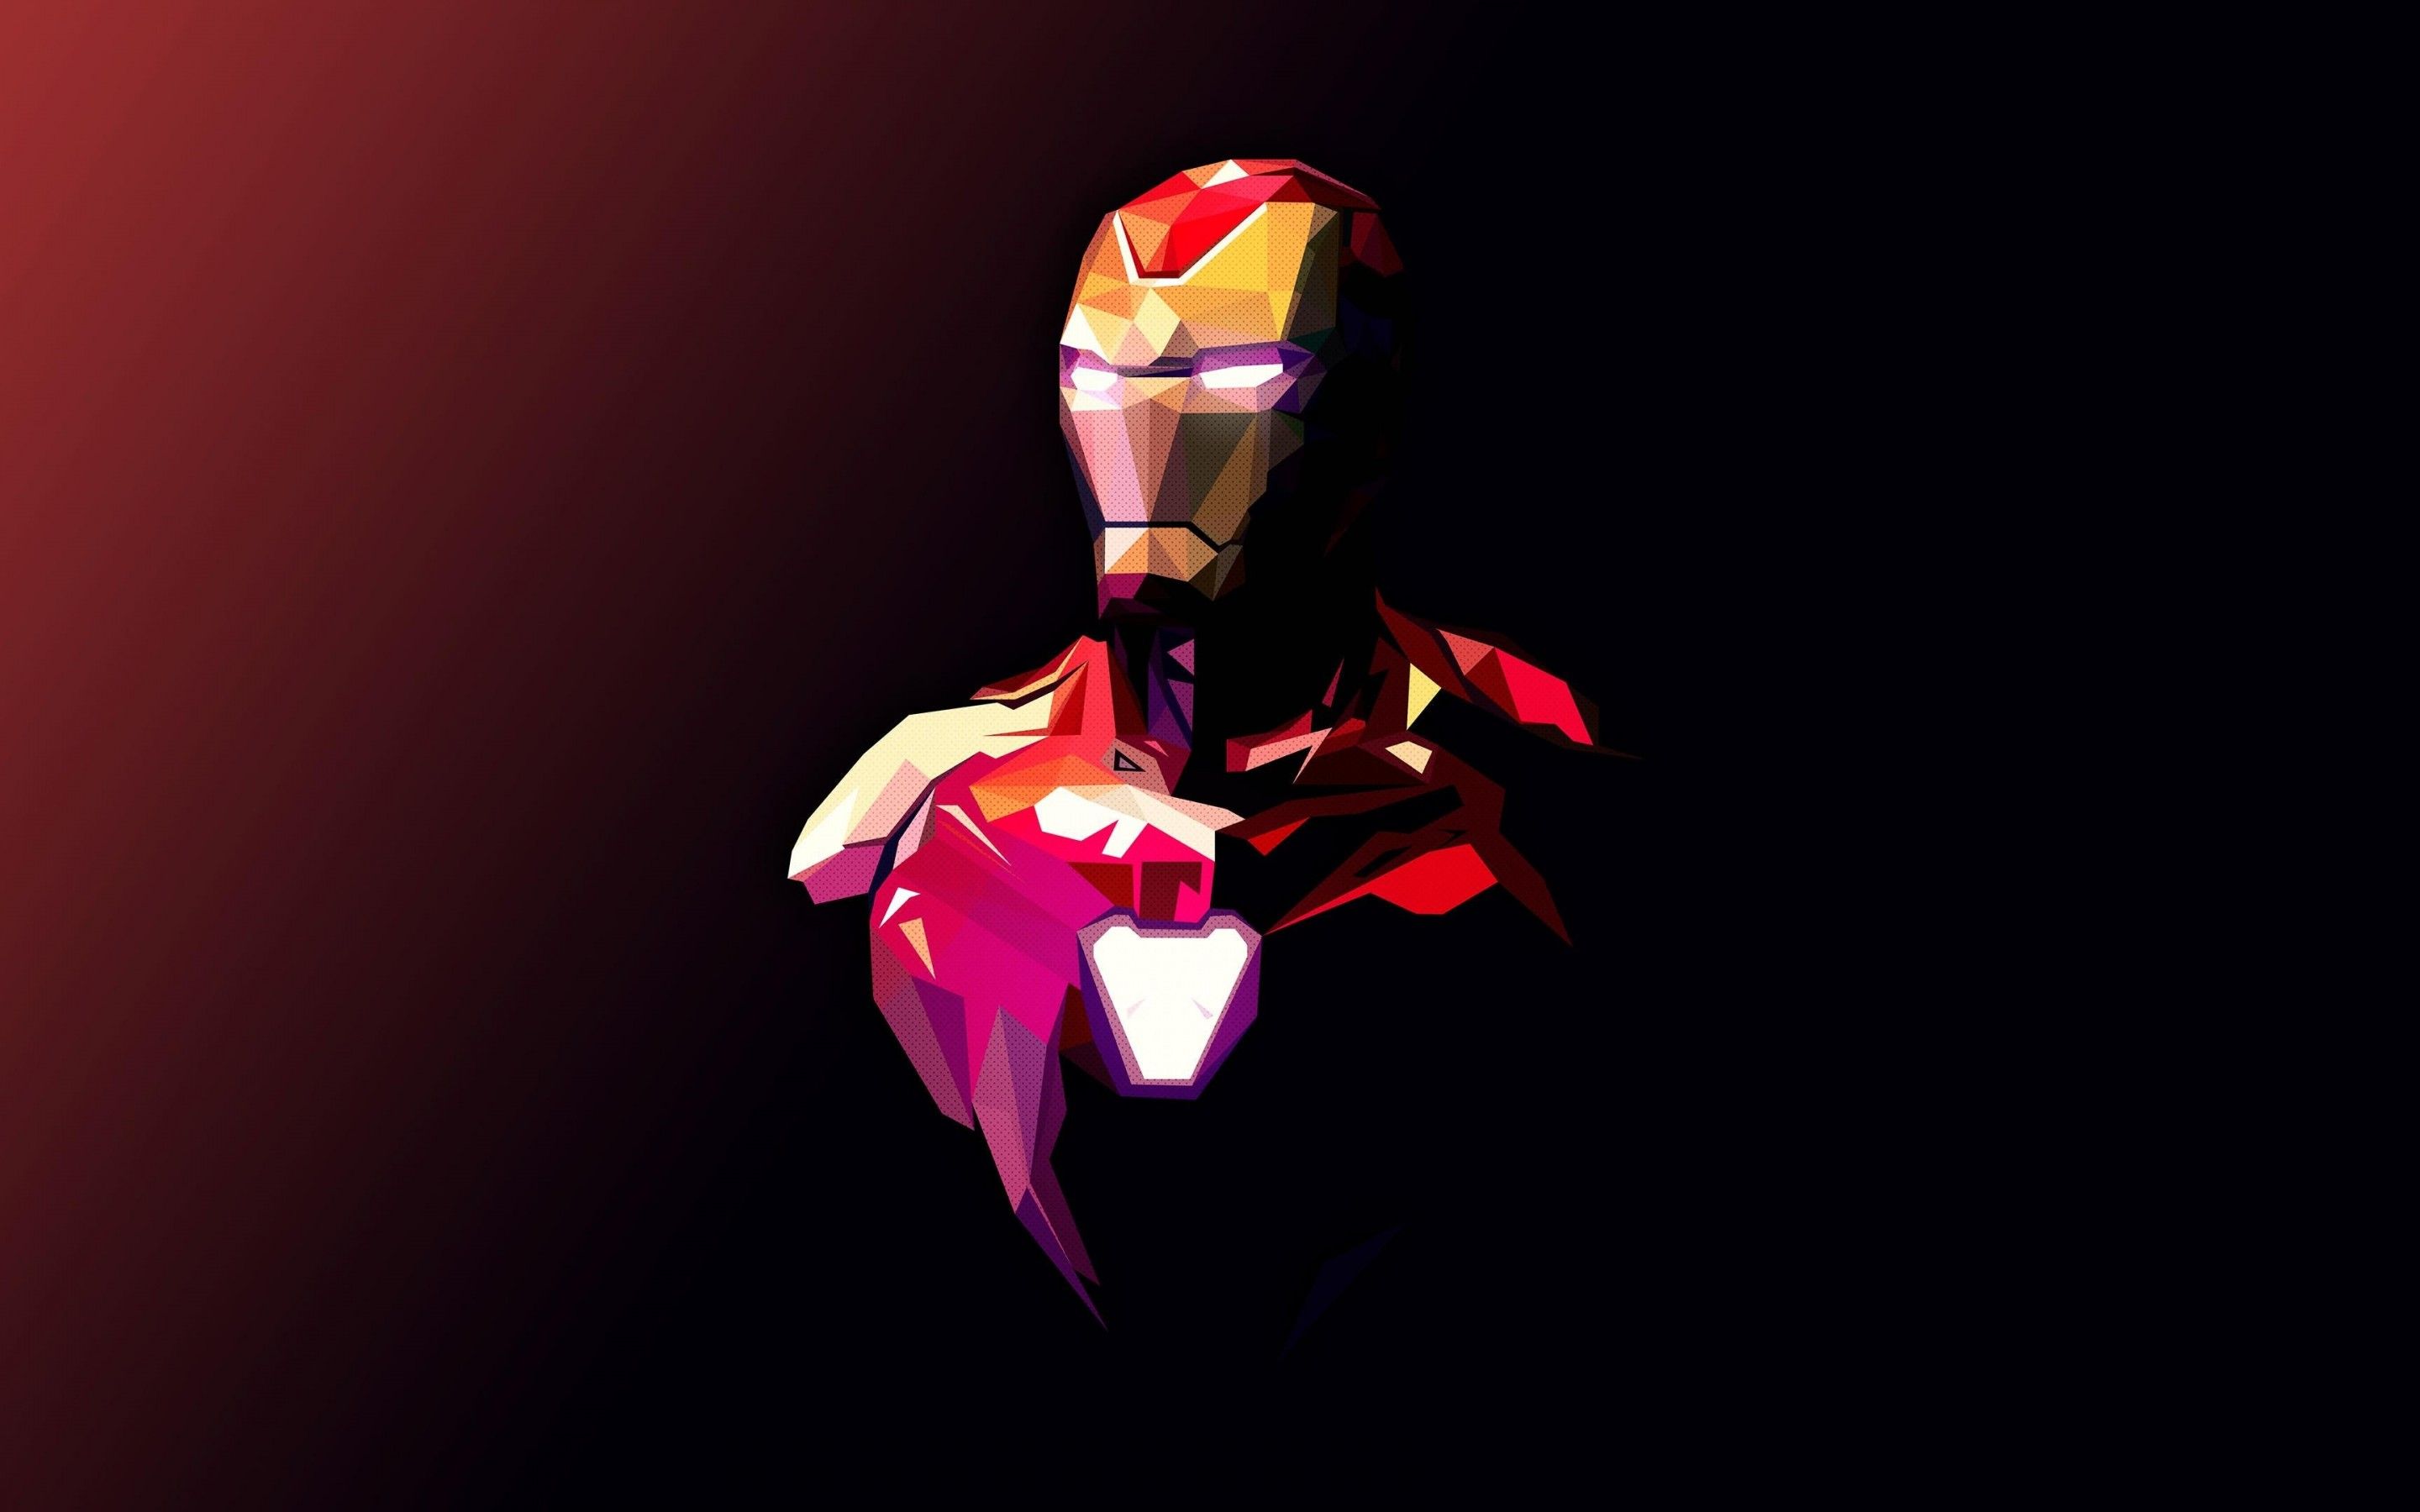 Iron Man 4K Wallpaper, Minimal art, Polygonal, Marvel Superheroes, Dark background, Graphics CGI